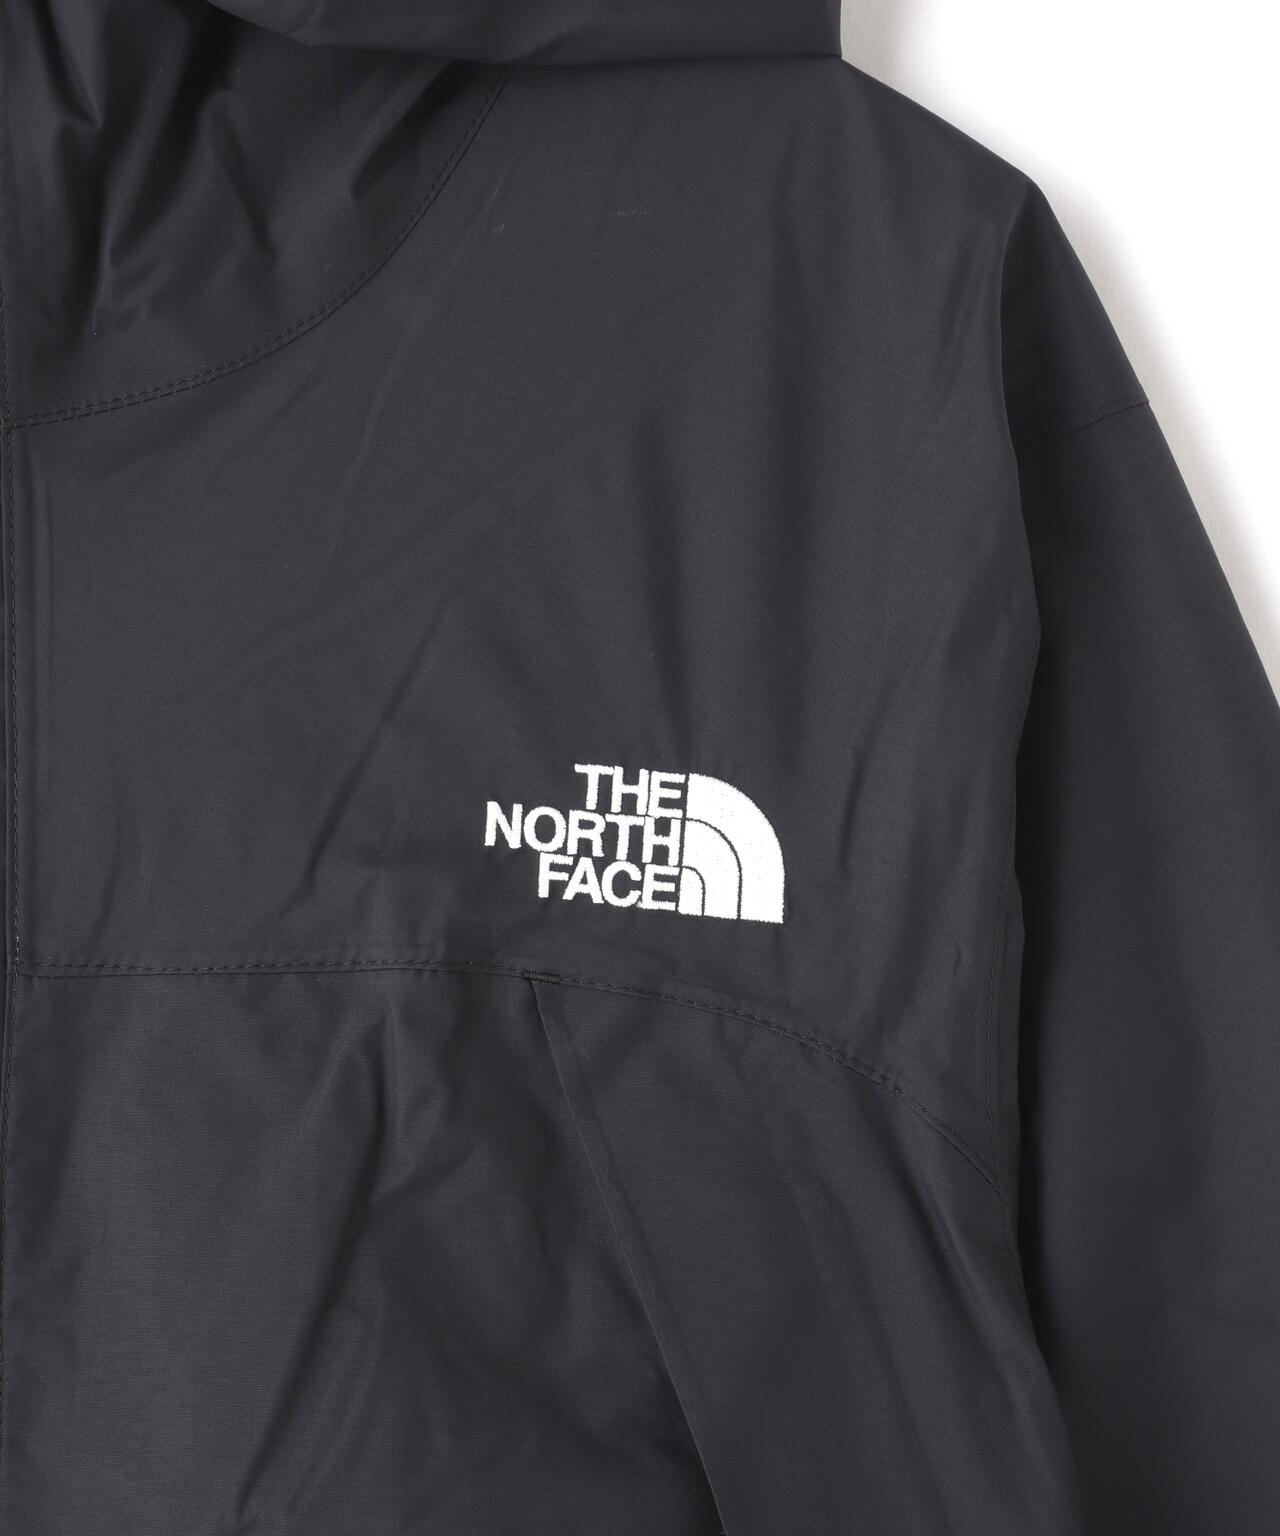 THE NORTH FACE/ザ・ノースフェイス/Dot Shot Jacket/ドットショットジャケット